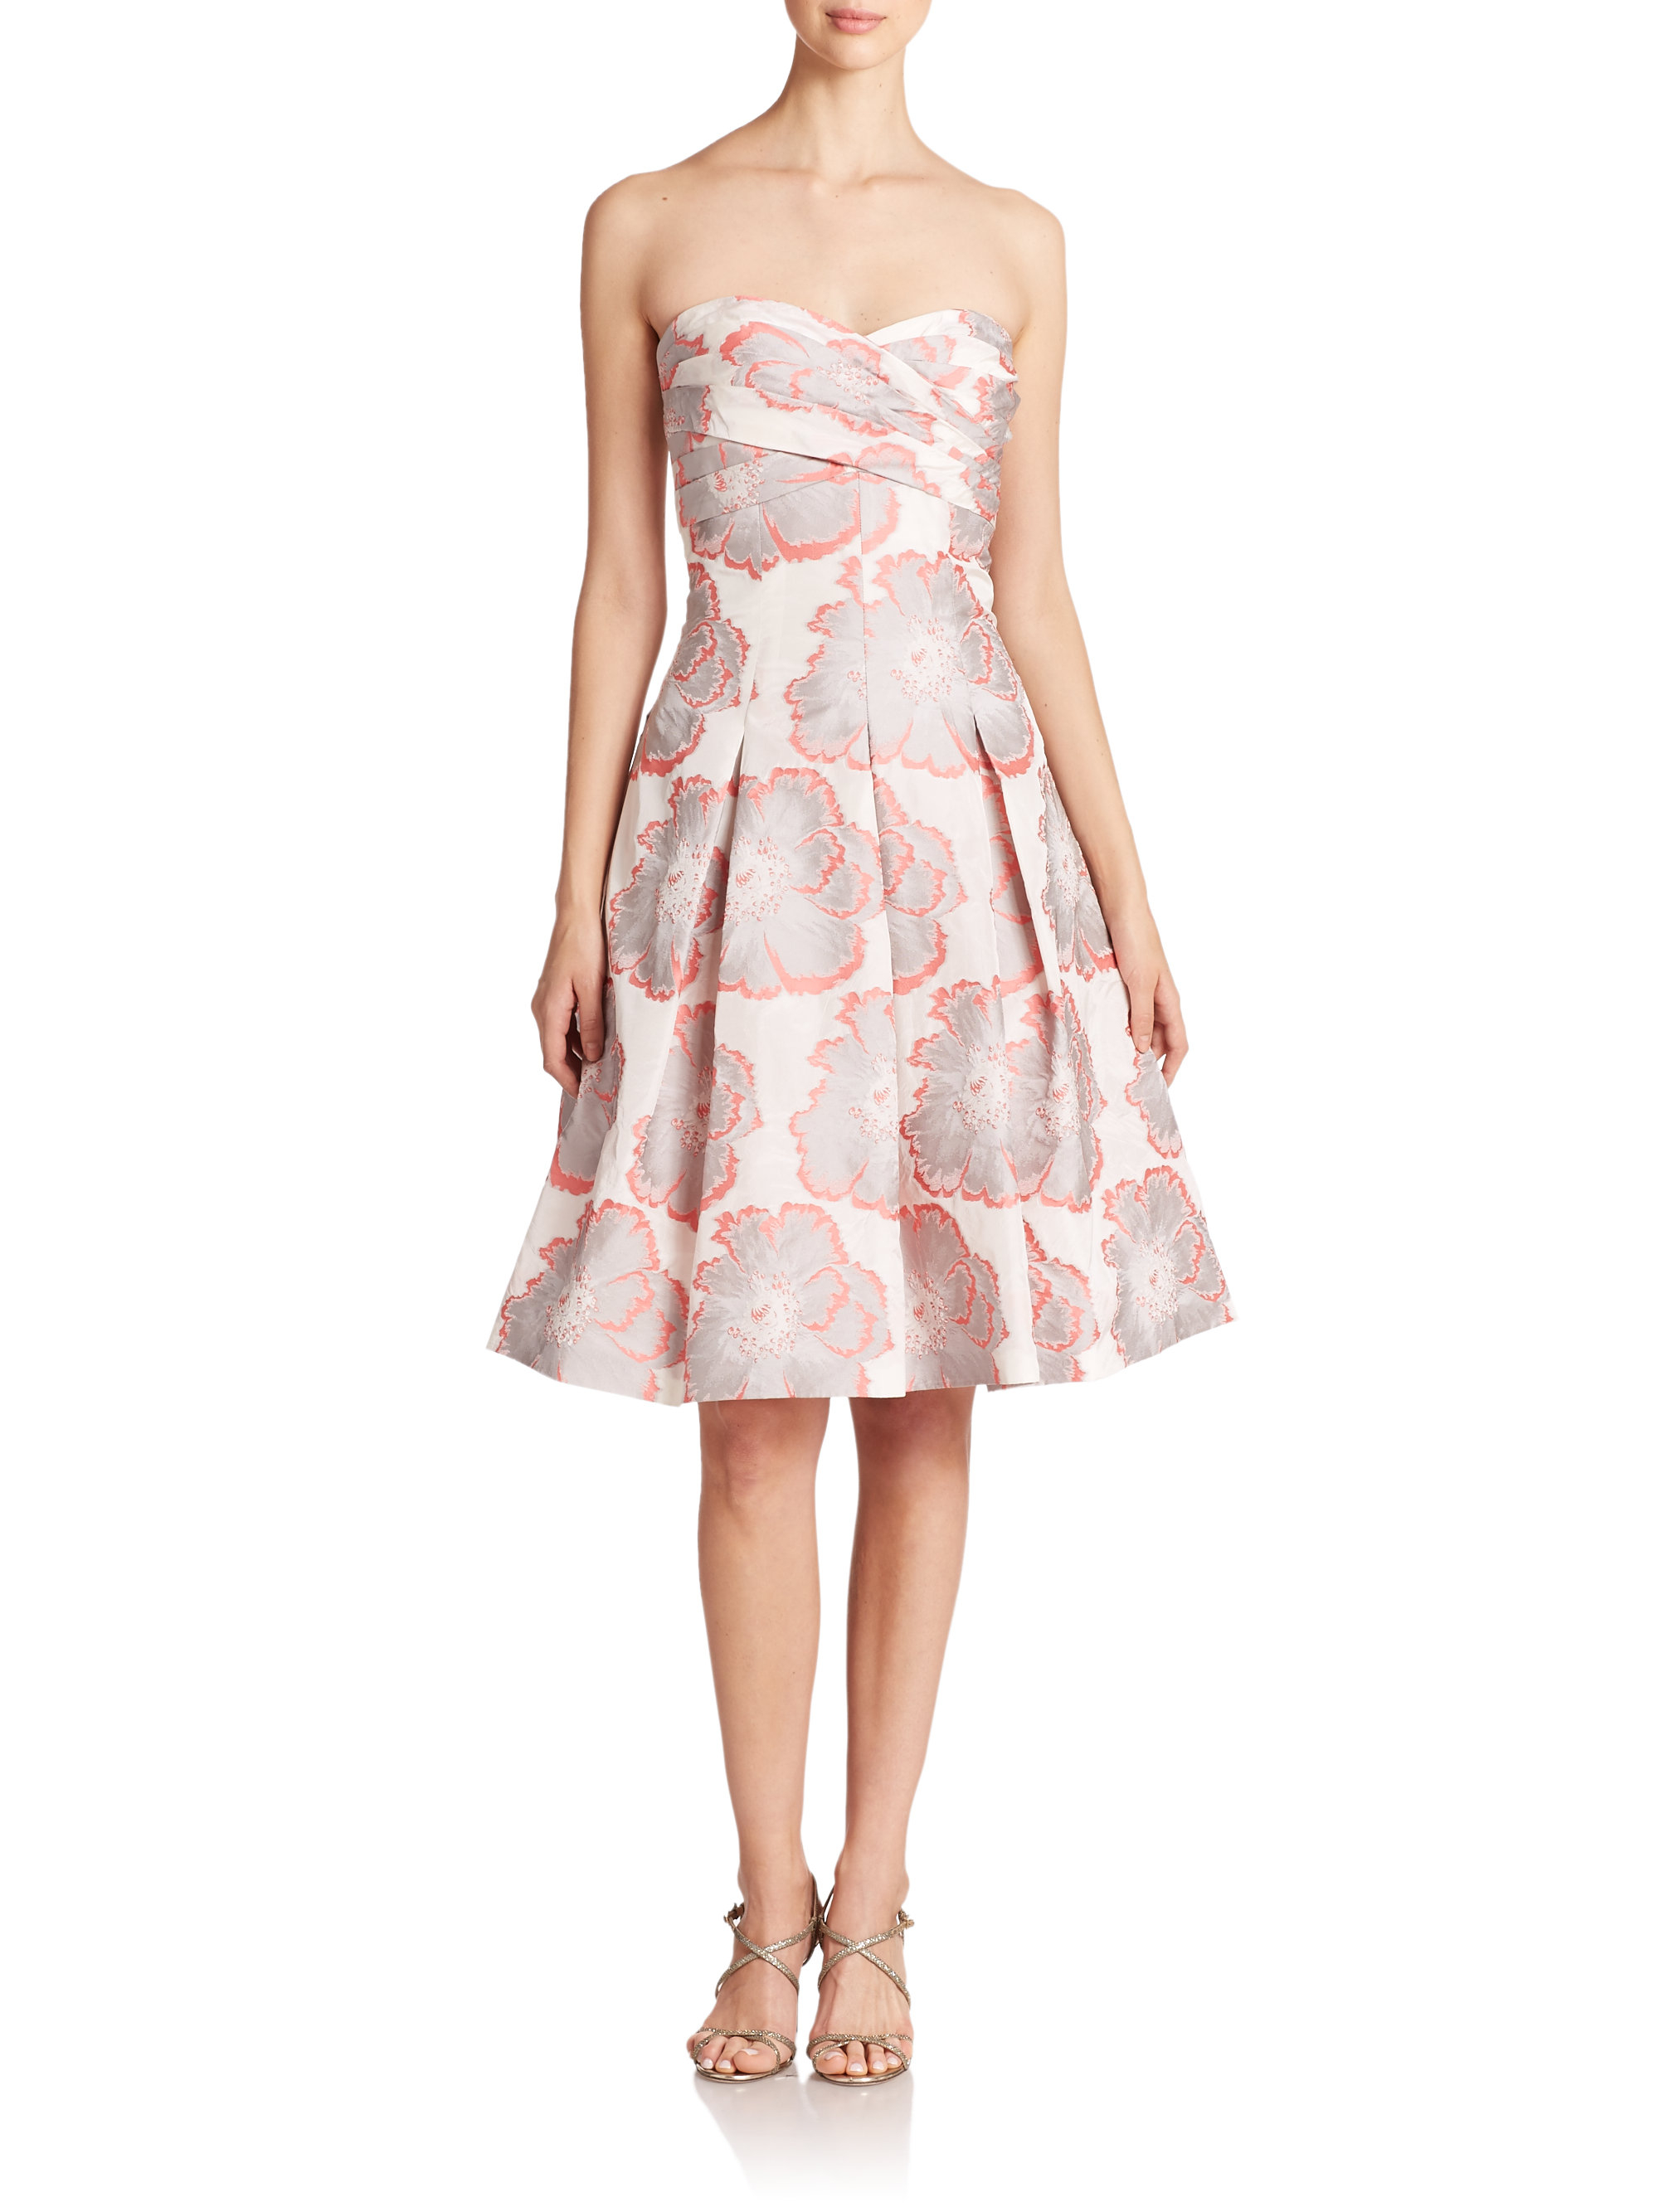 Lyst - Aidan Mattox Floral-print Strapless Jacquard Party Dress in Pink